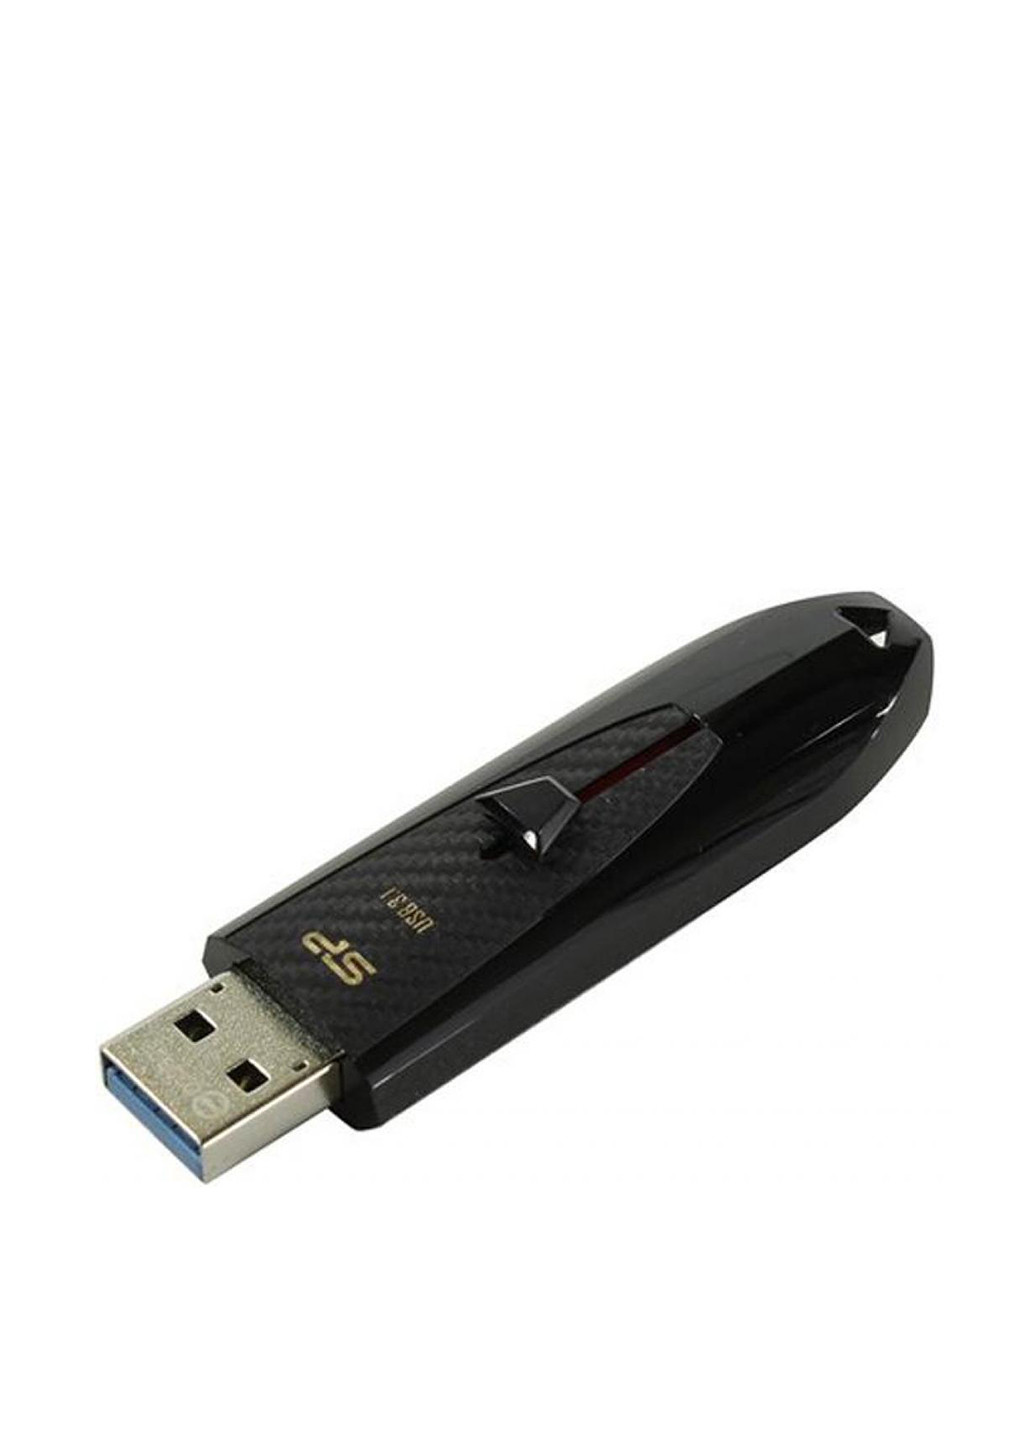 Флеш память USB Blaze B25 16GB USB 3.0 Black (SP016GBUF3B25V1K) Silicon Power флеш память usb silicon power blaze b25 16gb usb 3.0 black (sp016gbuf3b25v1k) (130221132)